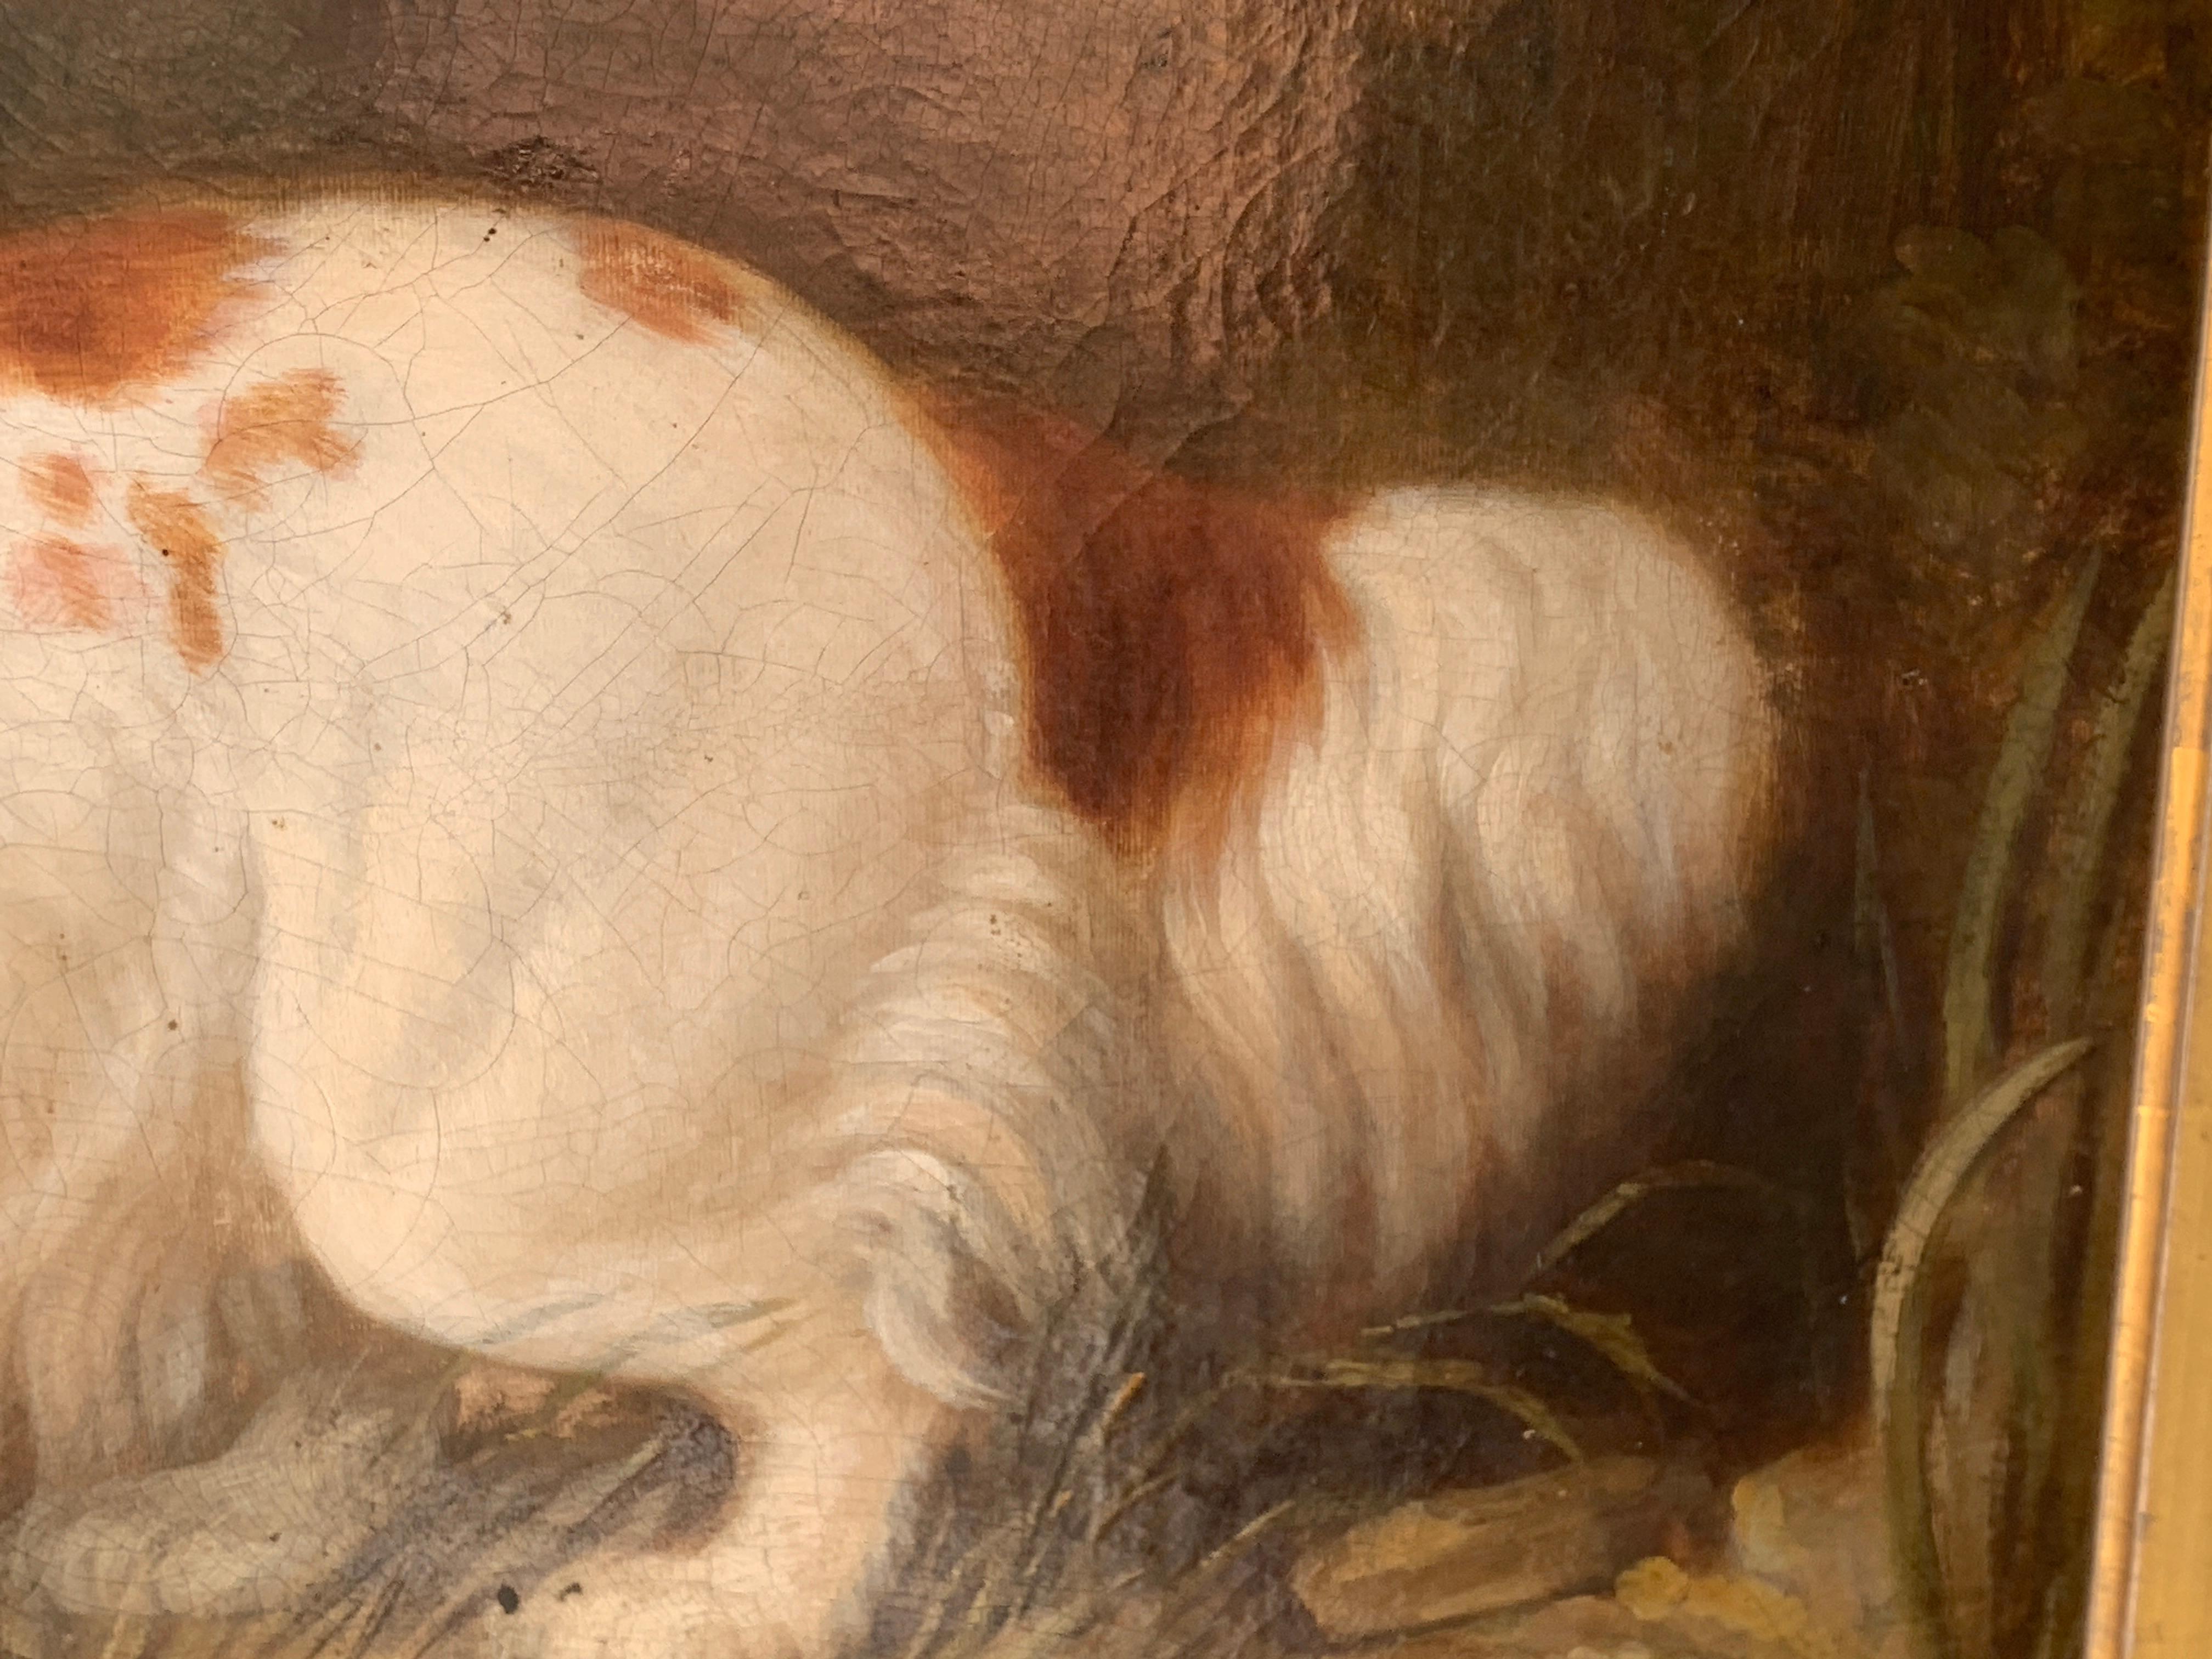 Early Victorian English Folk art portrait of a Spaniel dog or puppy - Folk Art Painting by Unknown